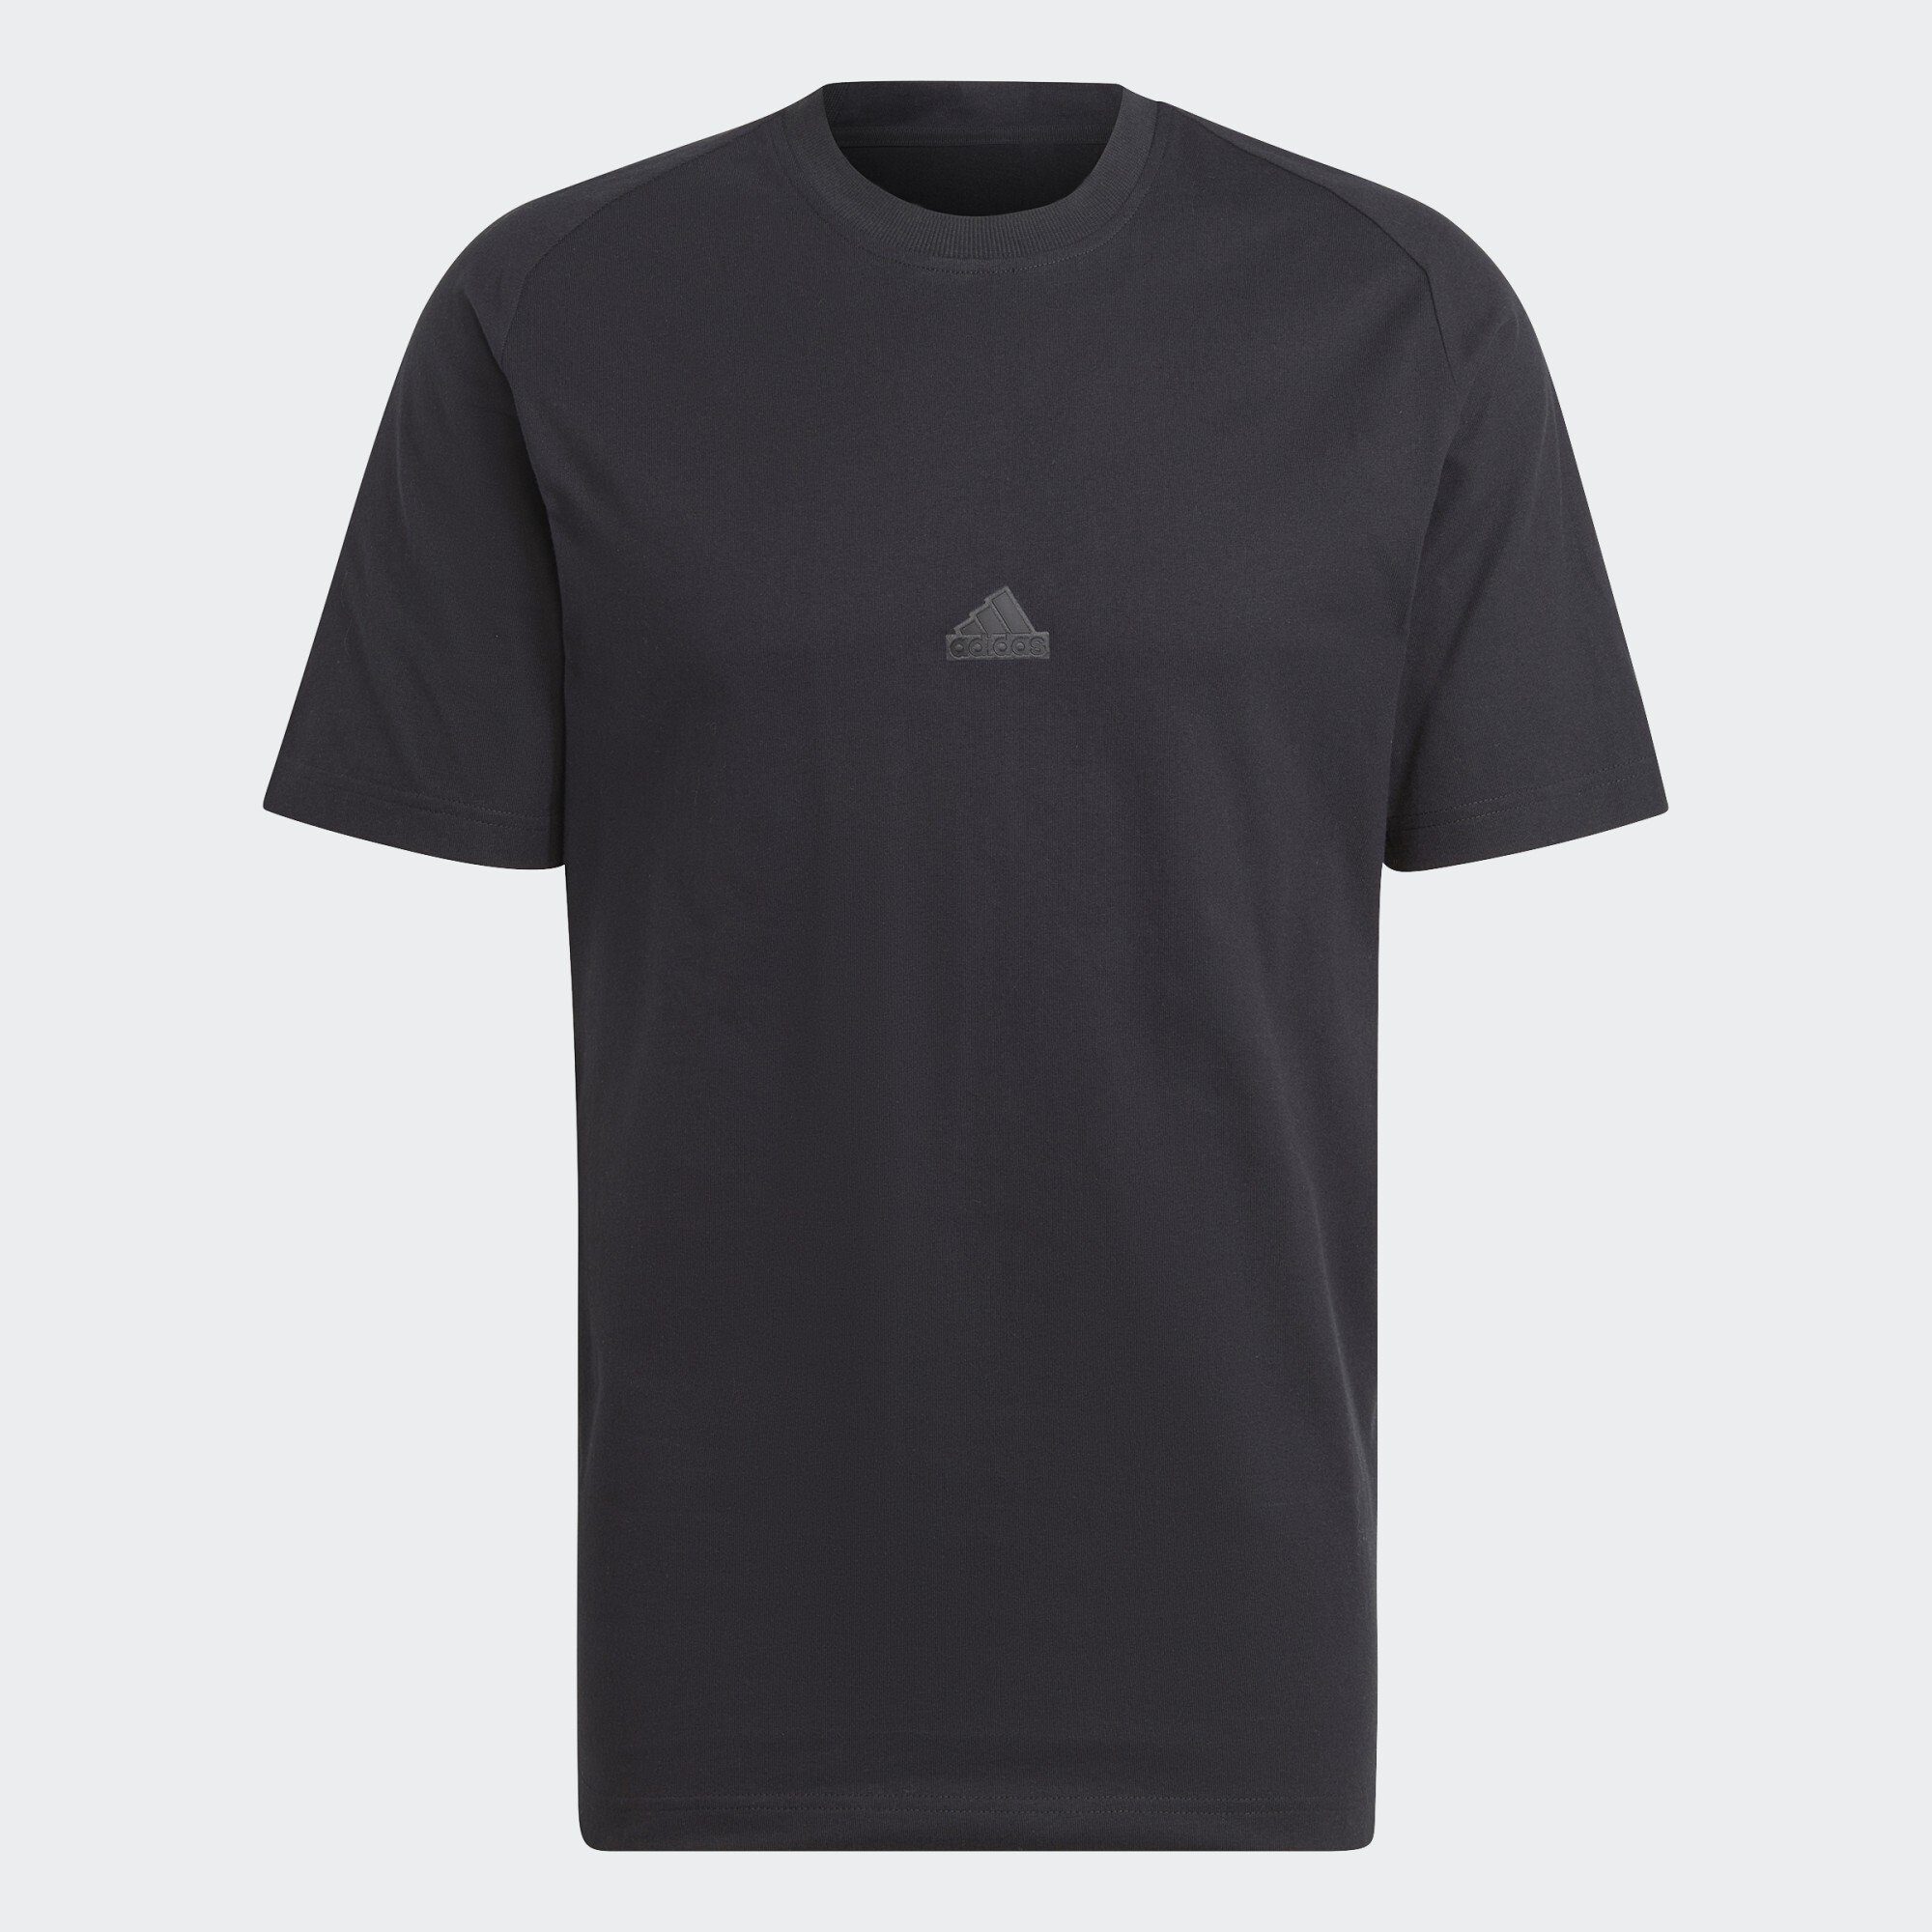 ADIDAS Z.N.E. T-SHIRT adidas Black Sportswear T-Shirt